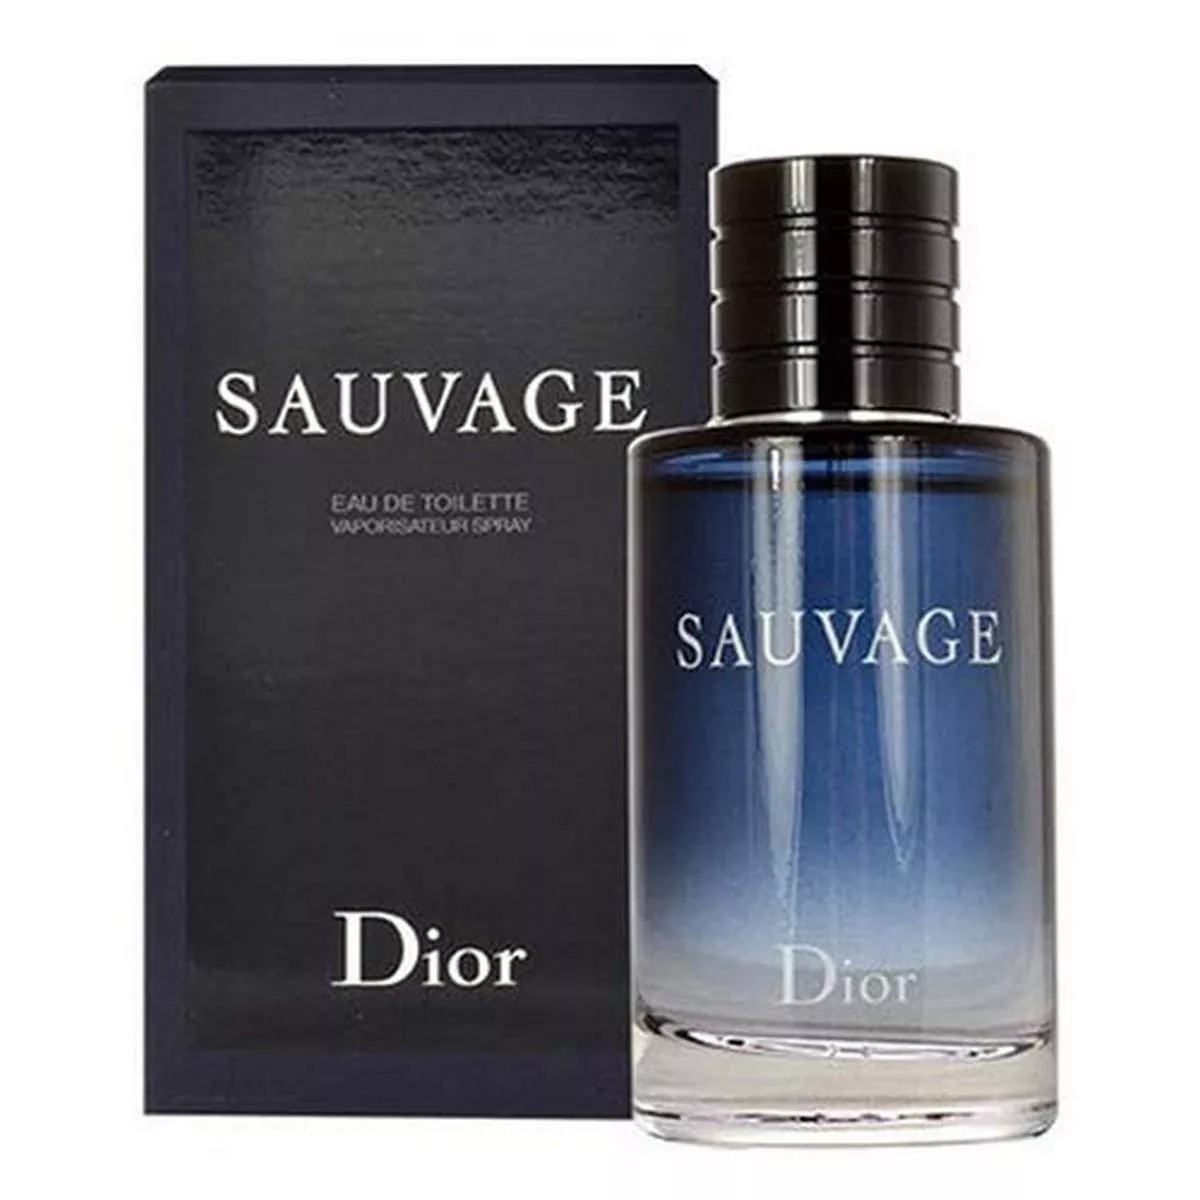 Nước hoa Dior Sauvage Eau de Toilette Eau de Toilette200ml chính hãng  Christian Dior cao cấp dàn  FITvn